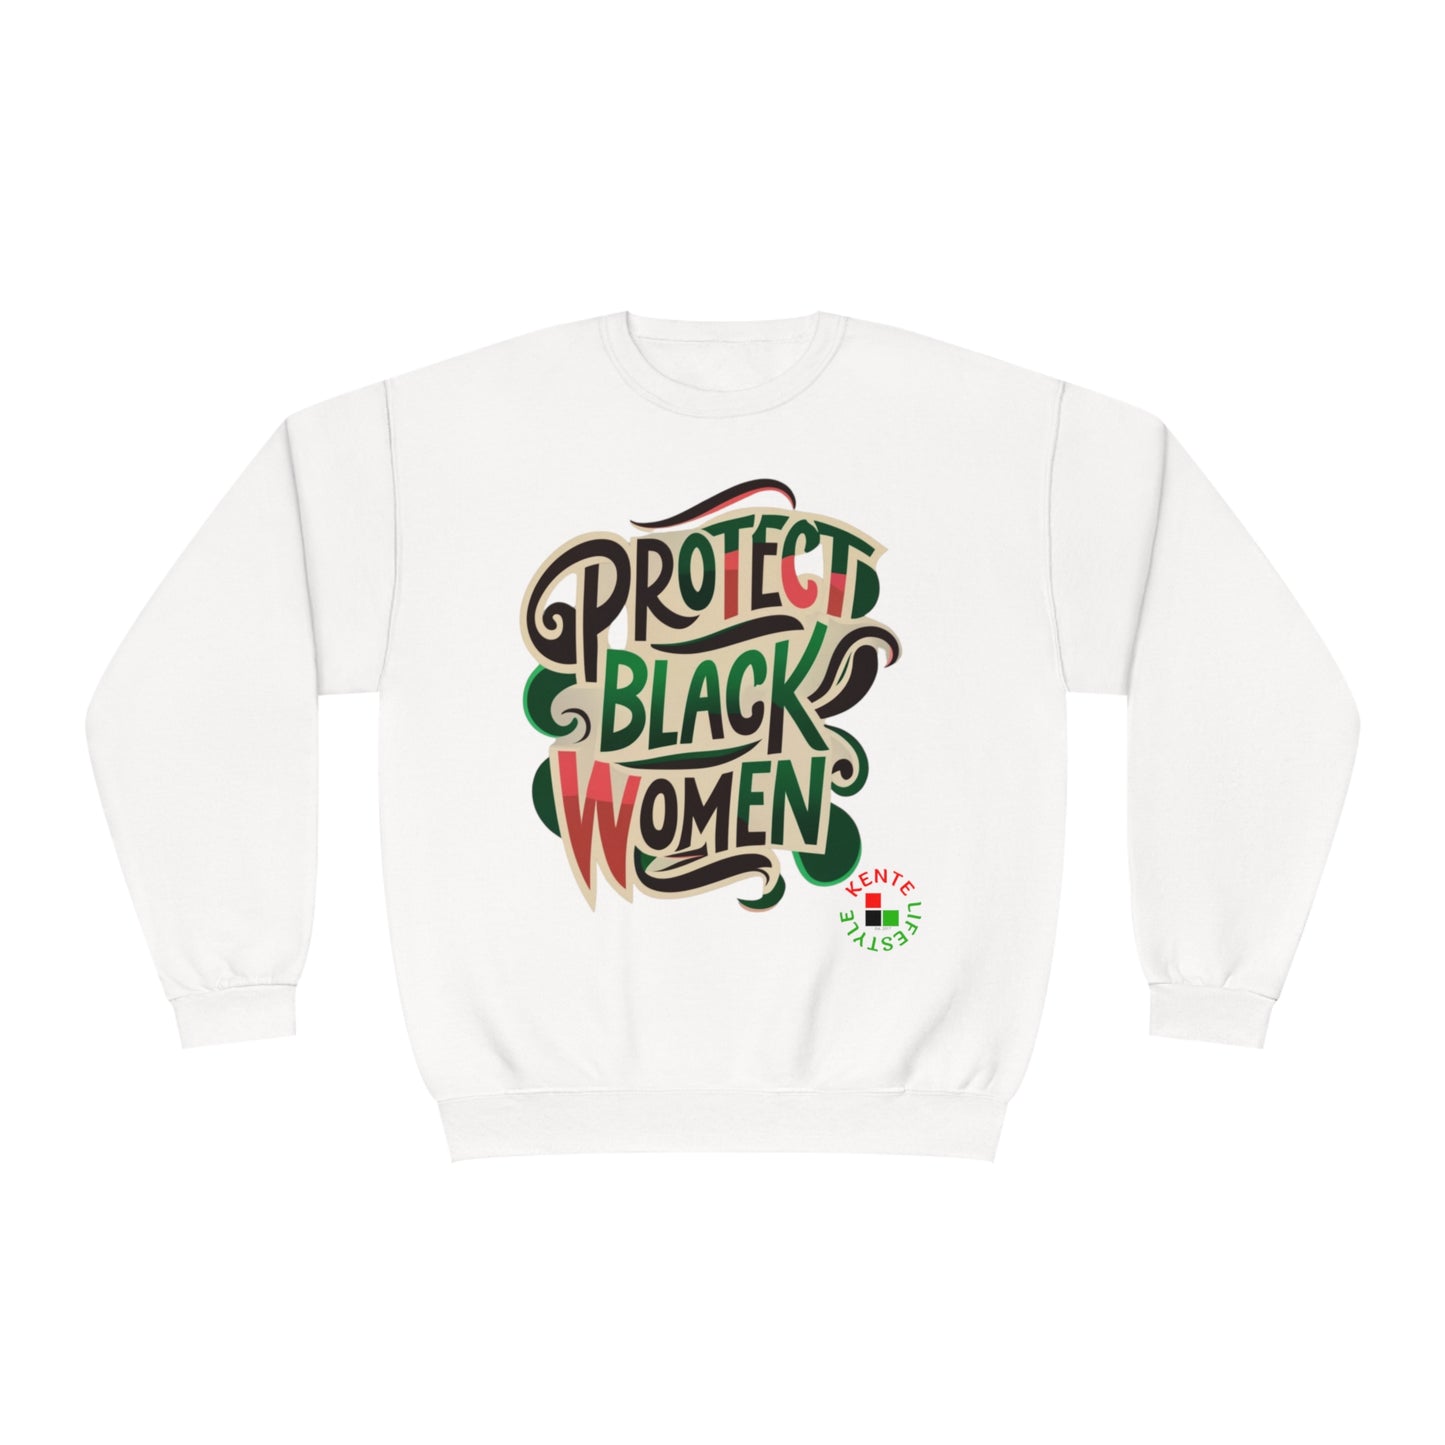 Protect Black Women -- Crewneck Sweatshirt